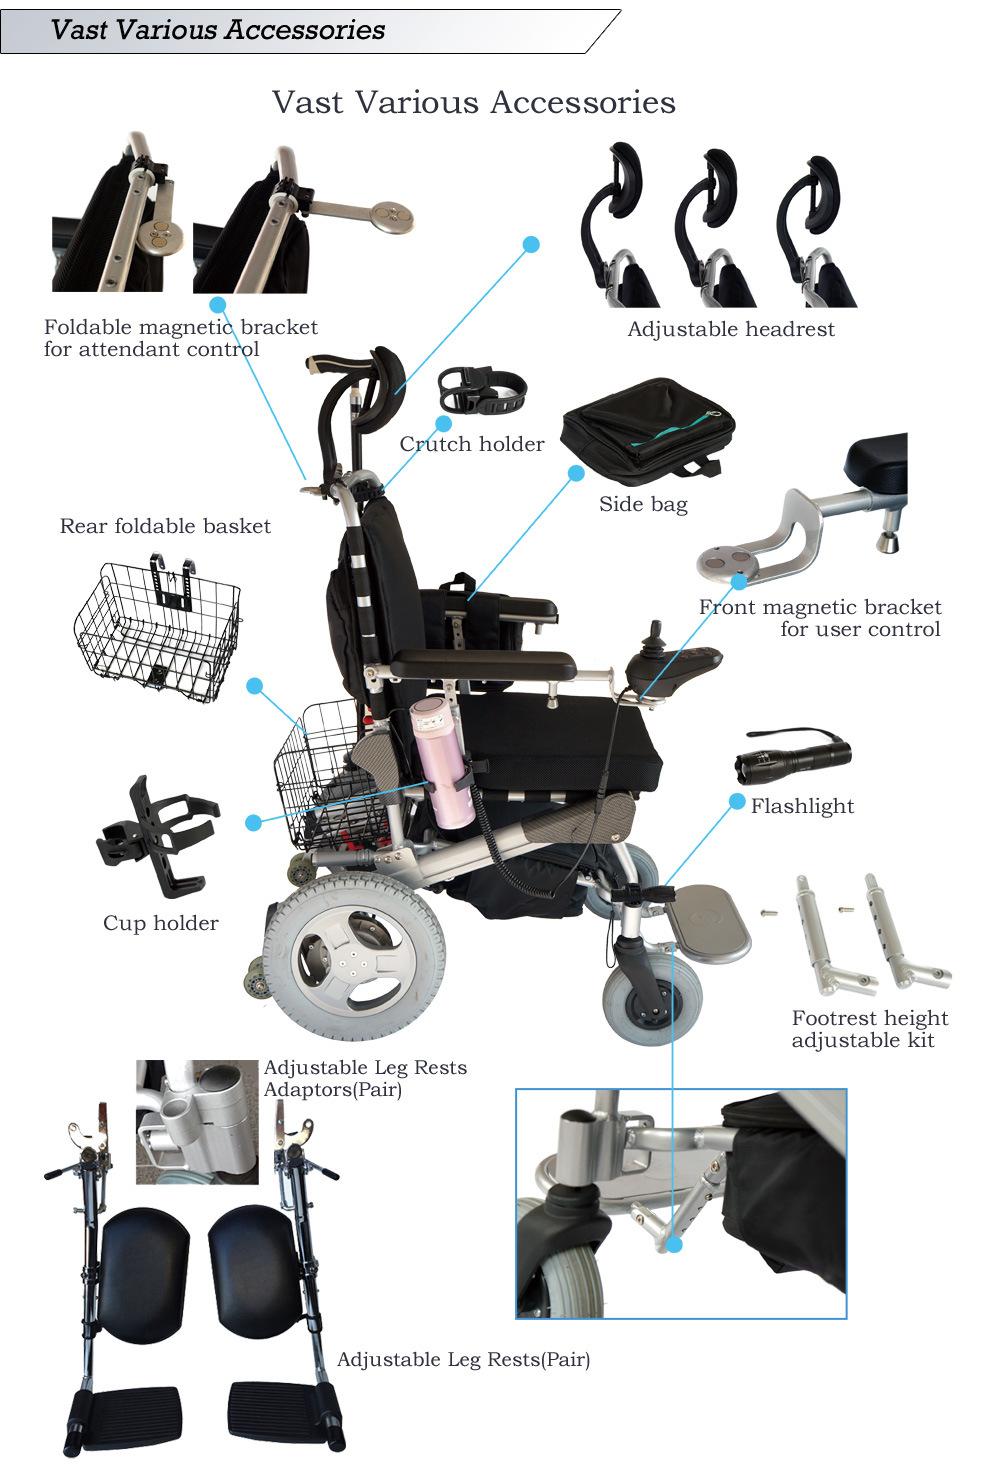 250W Foldable lightweight power wheelchair